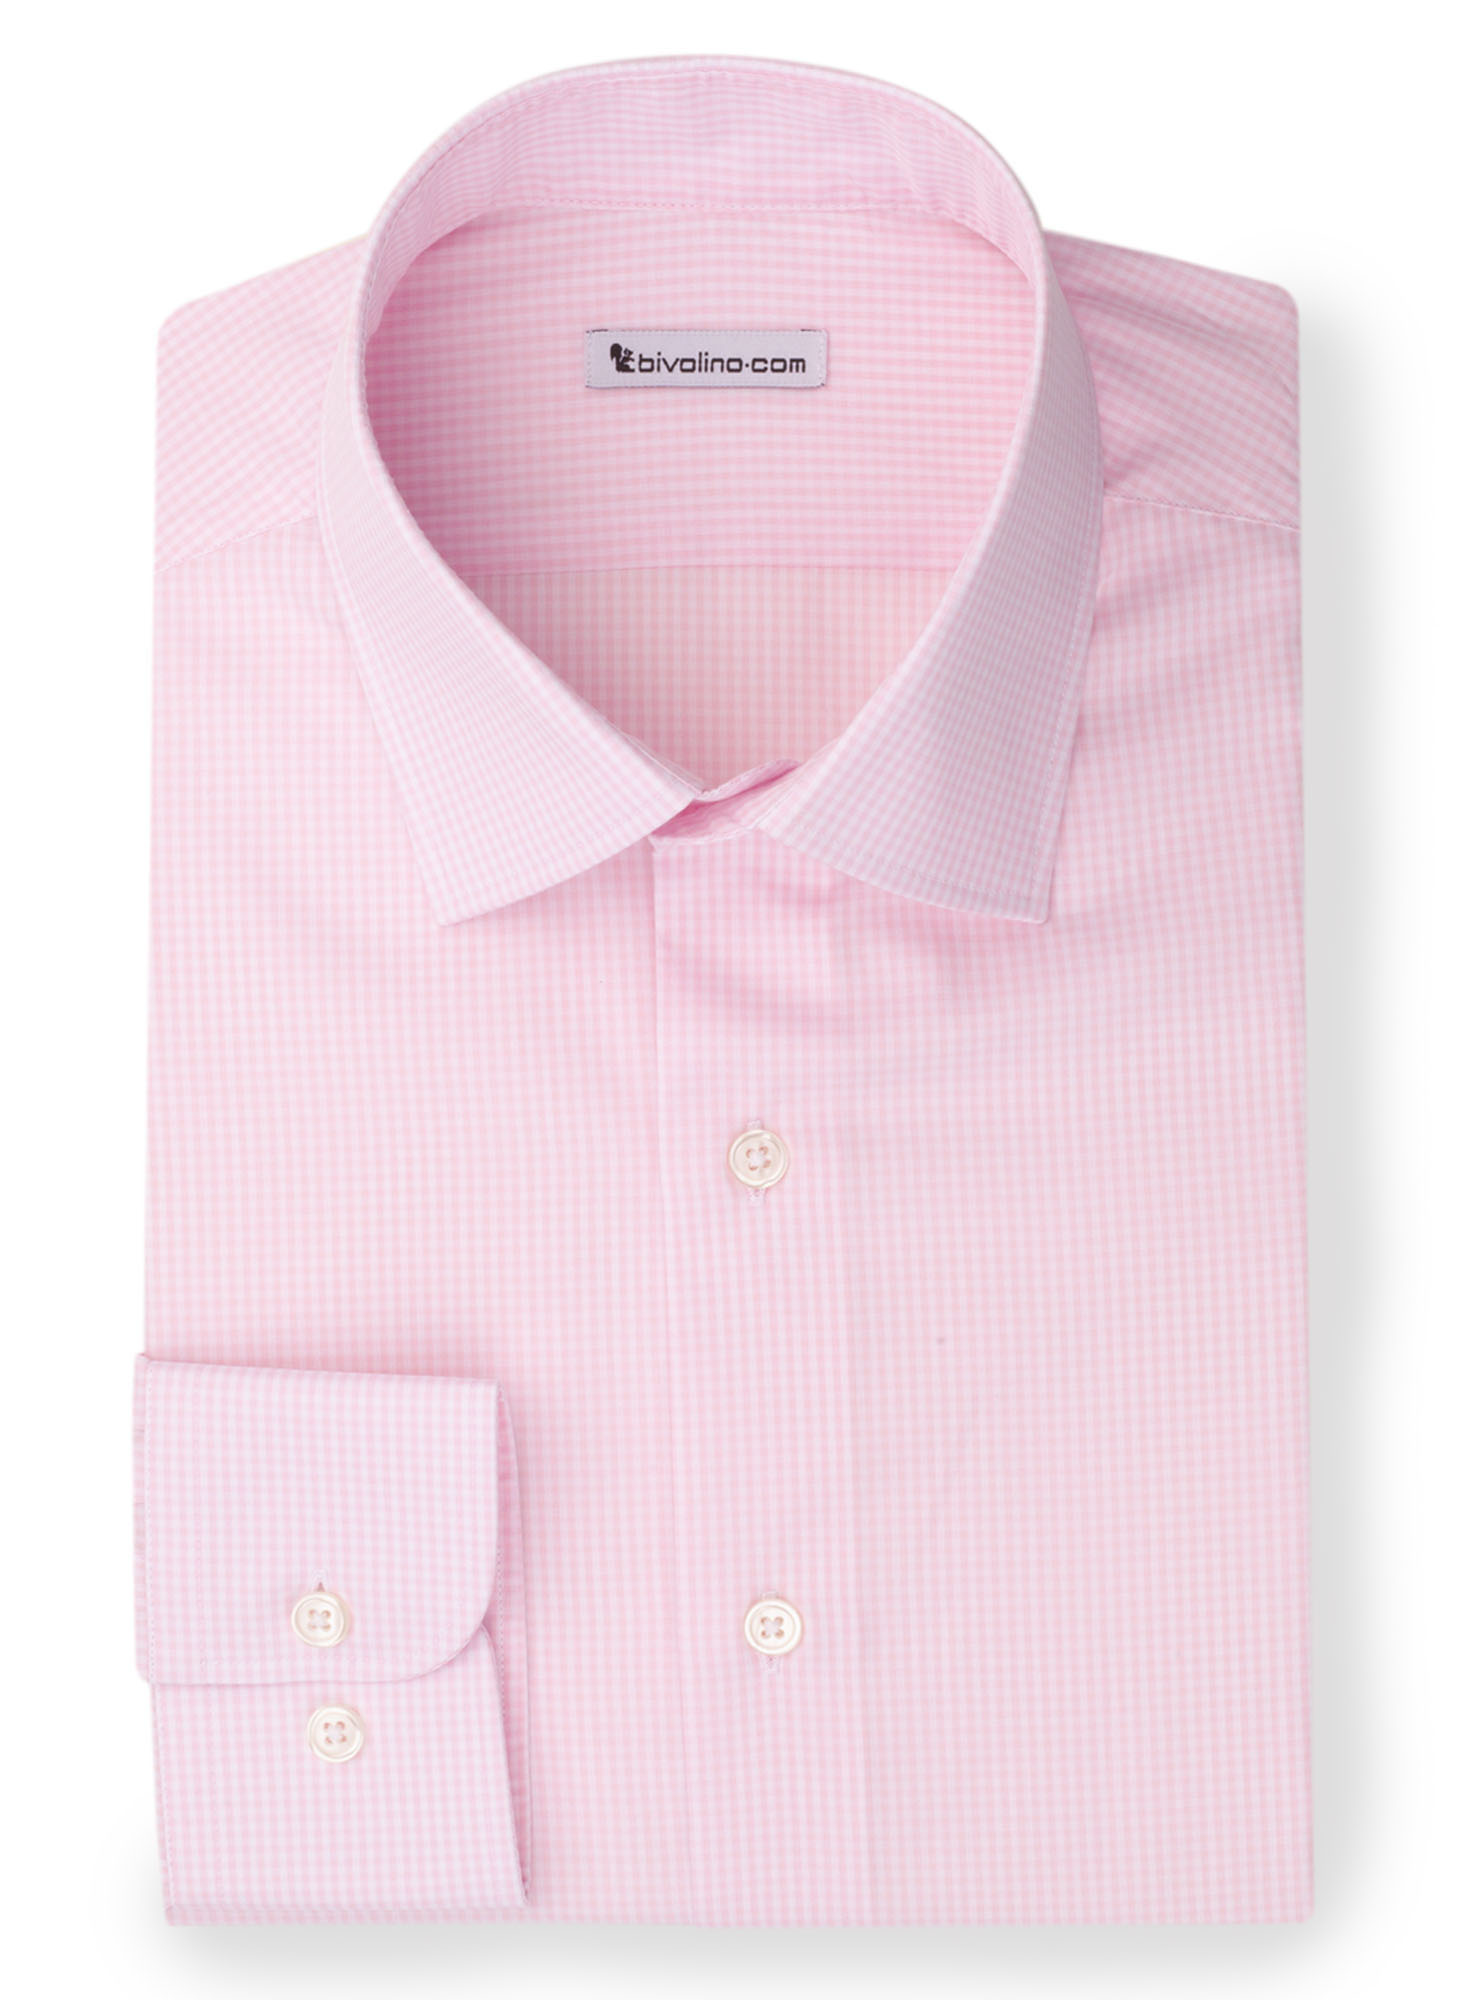 BOLIVICINI - roze popeline boernbont overhemd - Kento 1